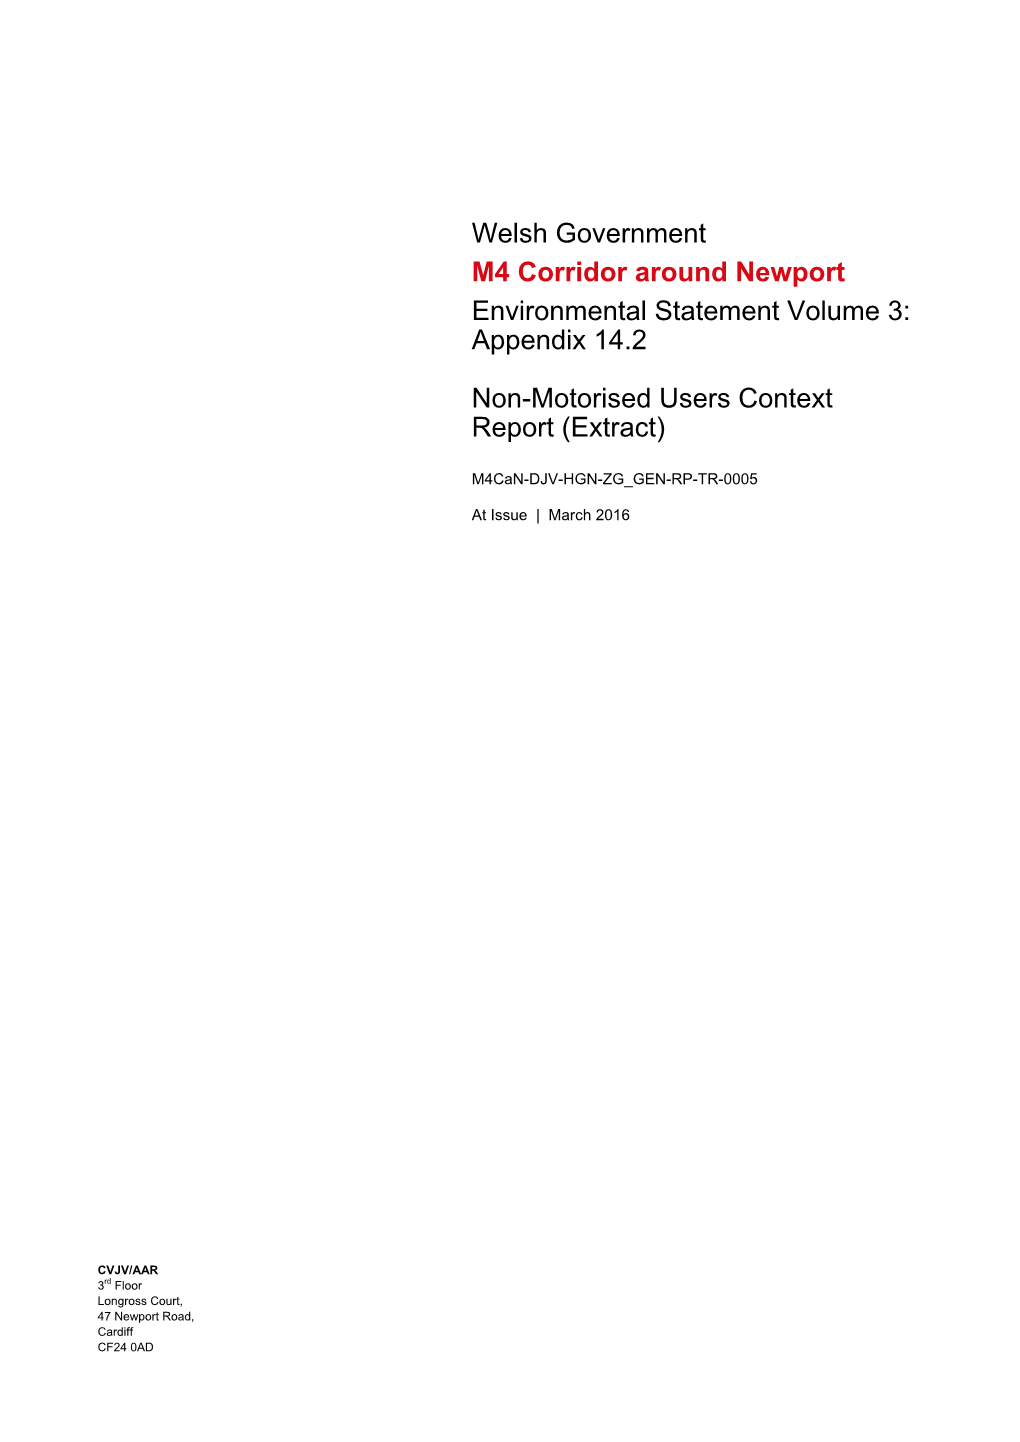 Welsh Government M4 Corridor Around Newport Environmental Statement Volume 3: Appendix 14.2 Non-Motorised Users Context Report